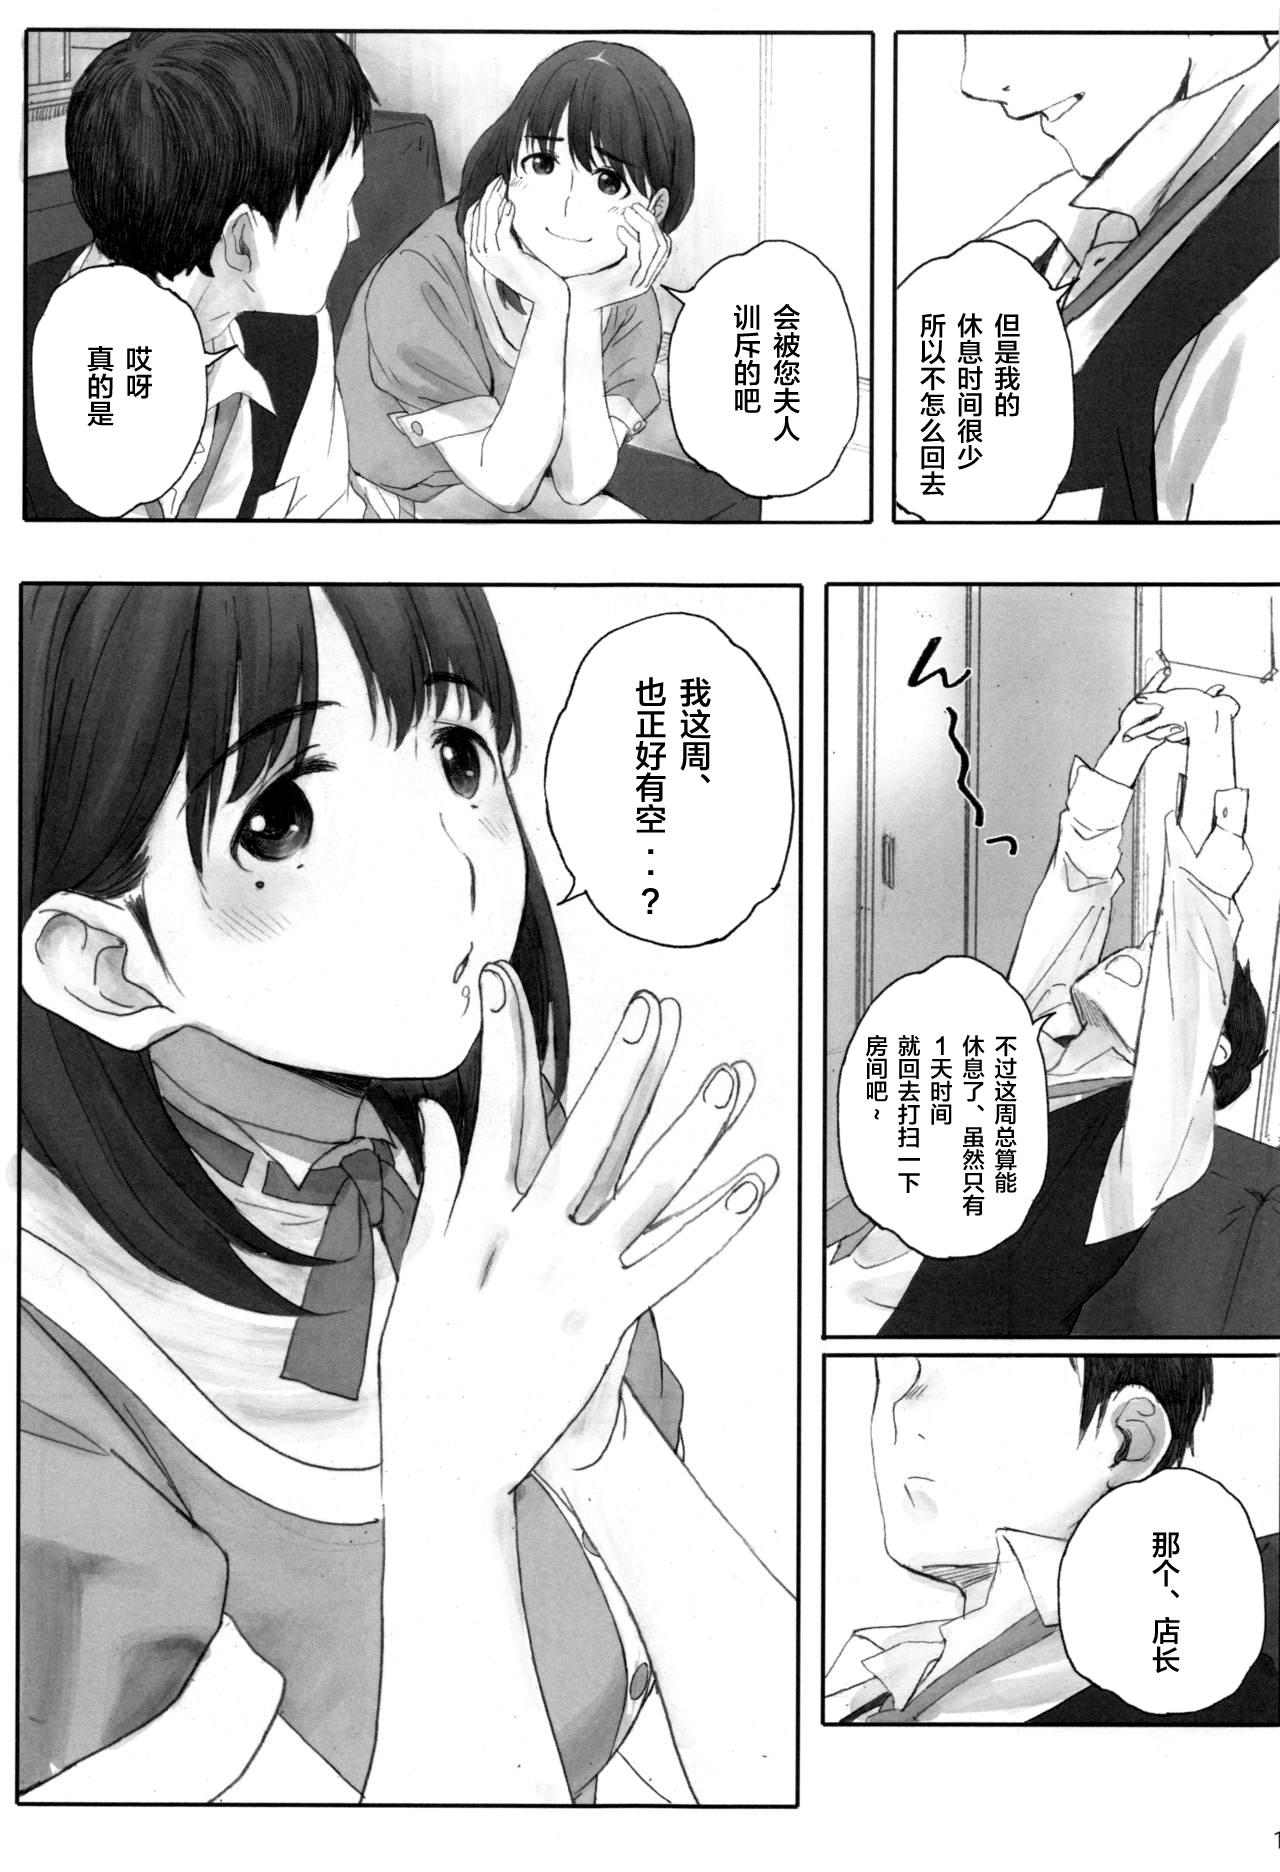 Dirty Negative Love Hatsukoi #1 - Love plus Police - Page 10